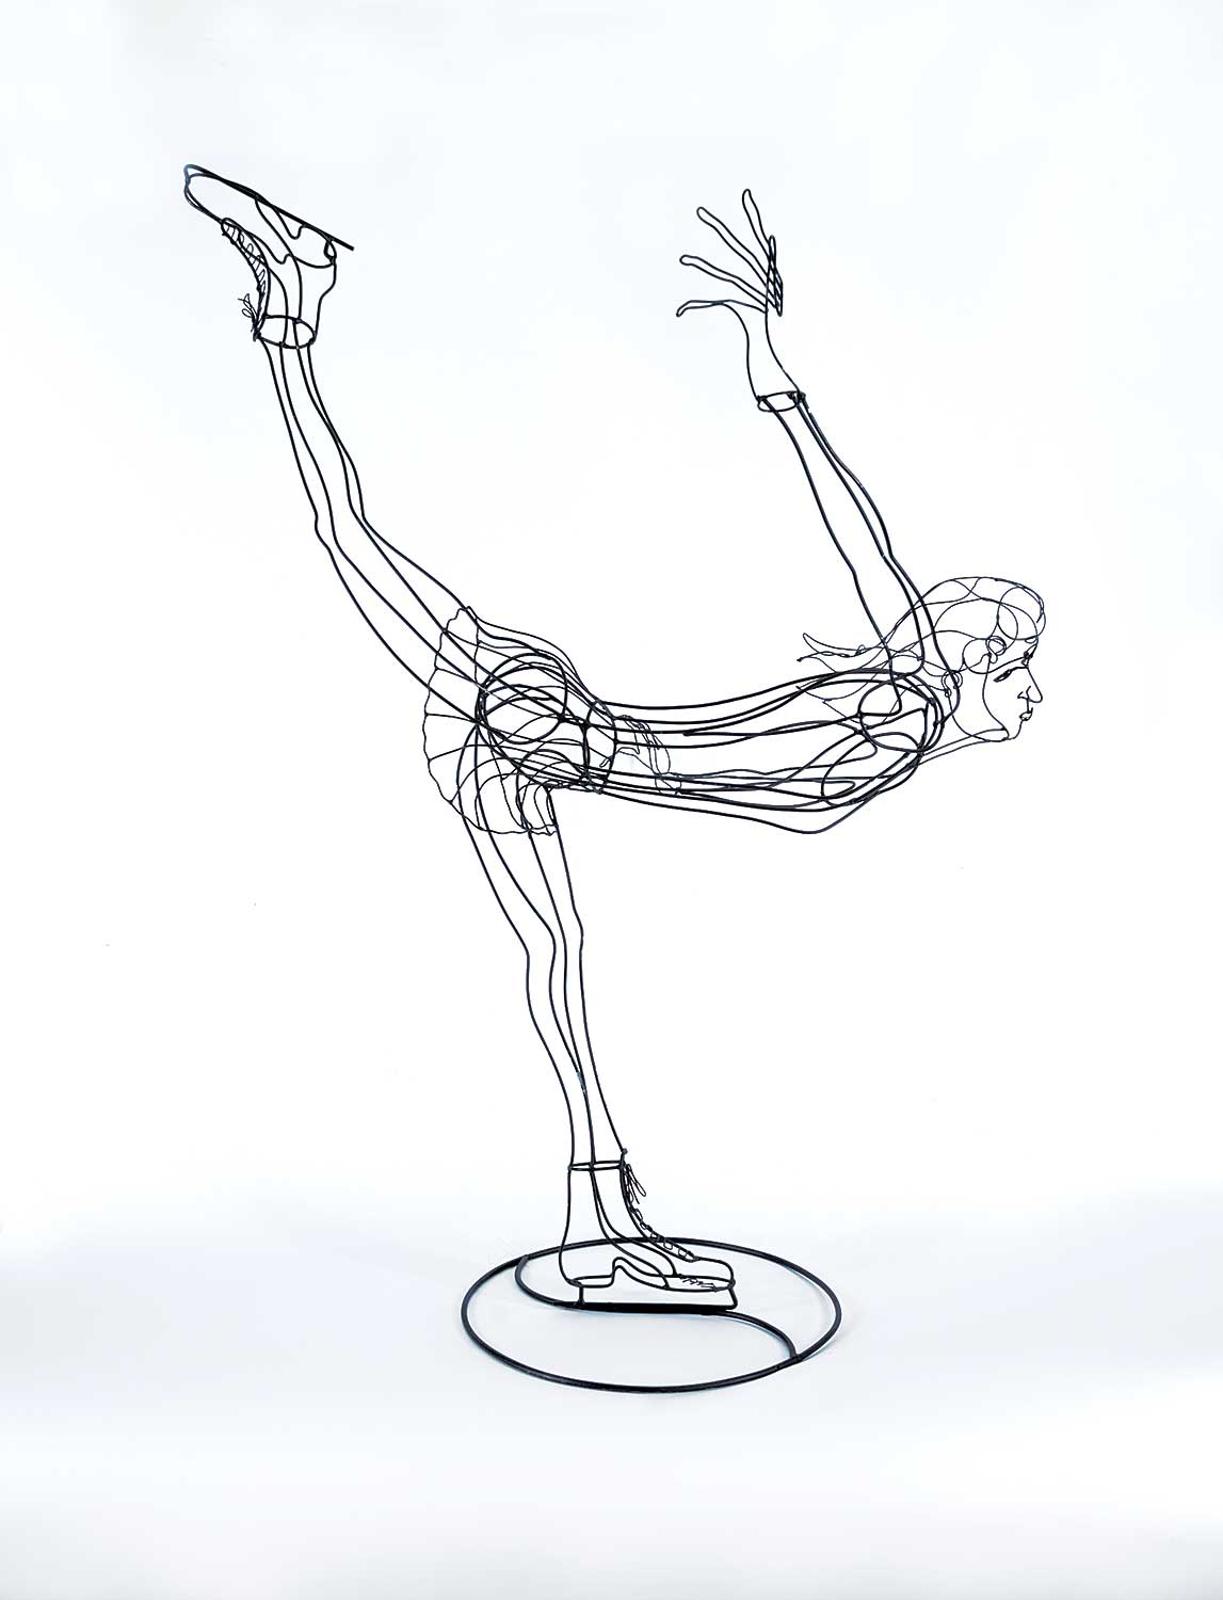 Rudy Kehkla (1950) - Untitled - The Figure Skater